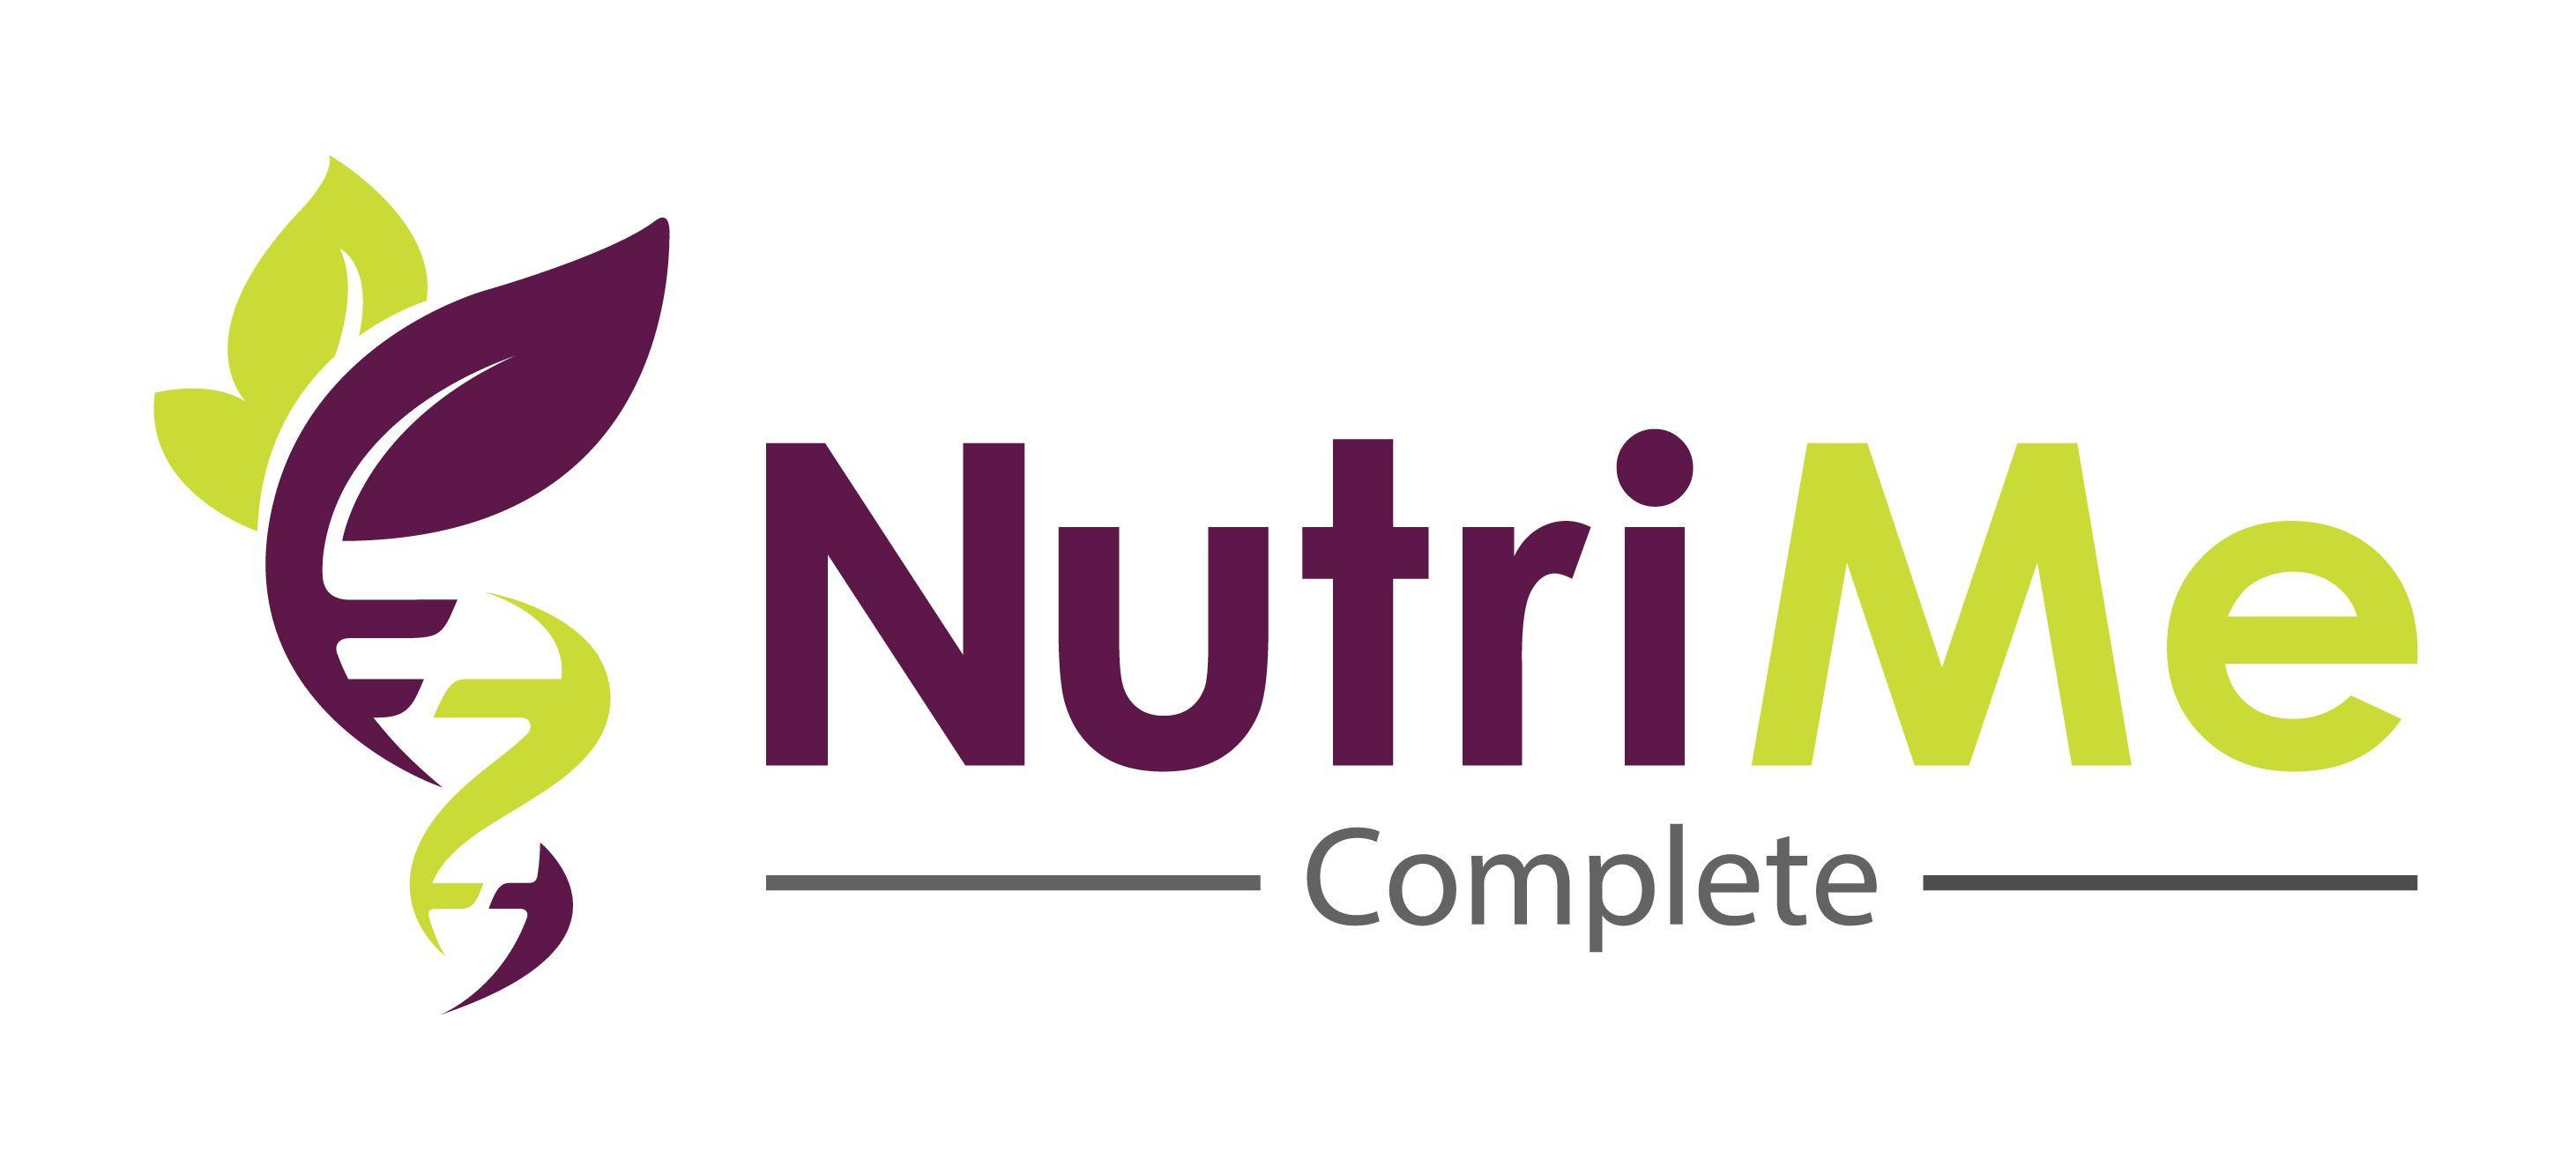 Complete Logo - DNAnutriControl